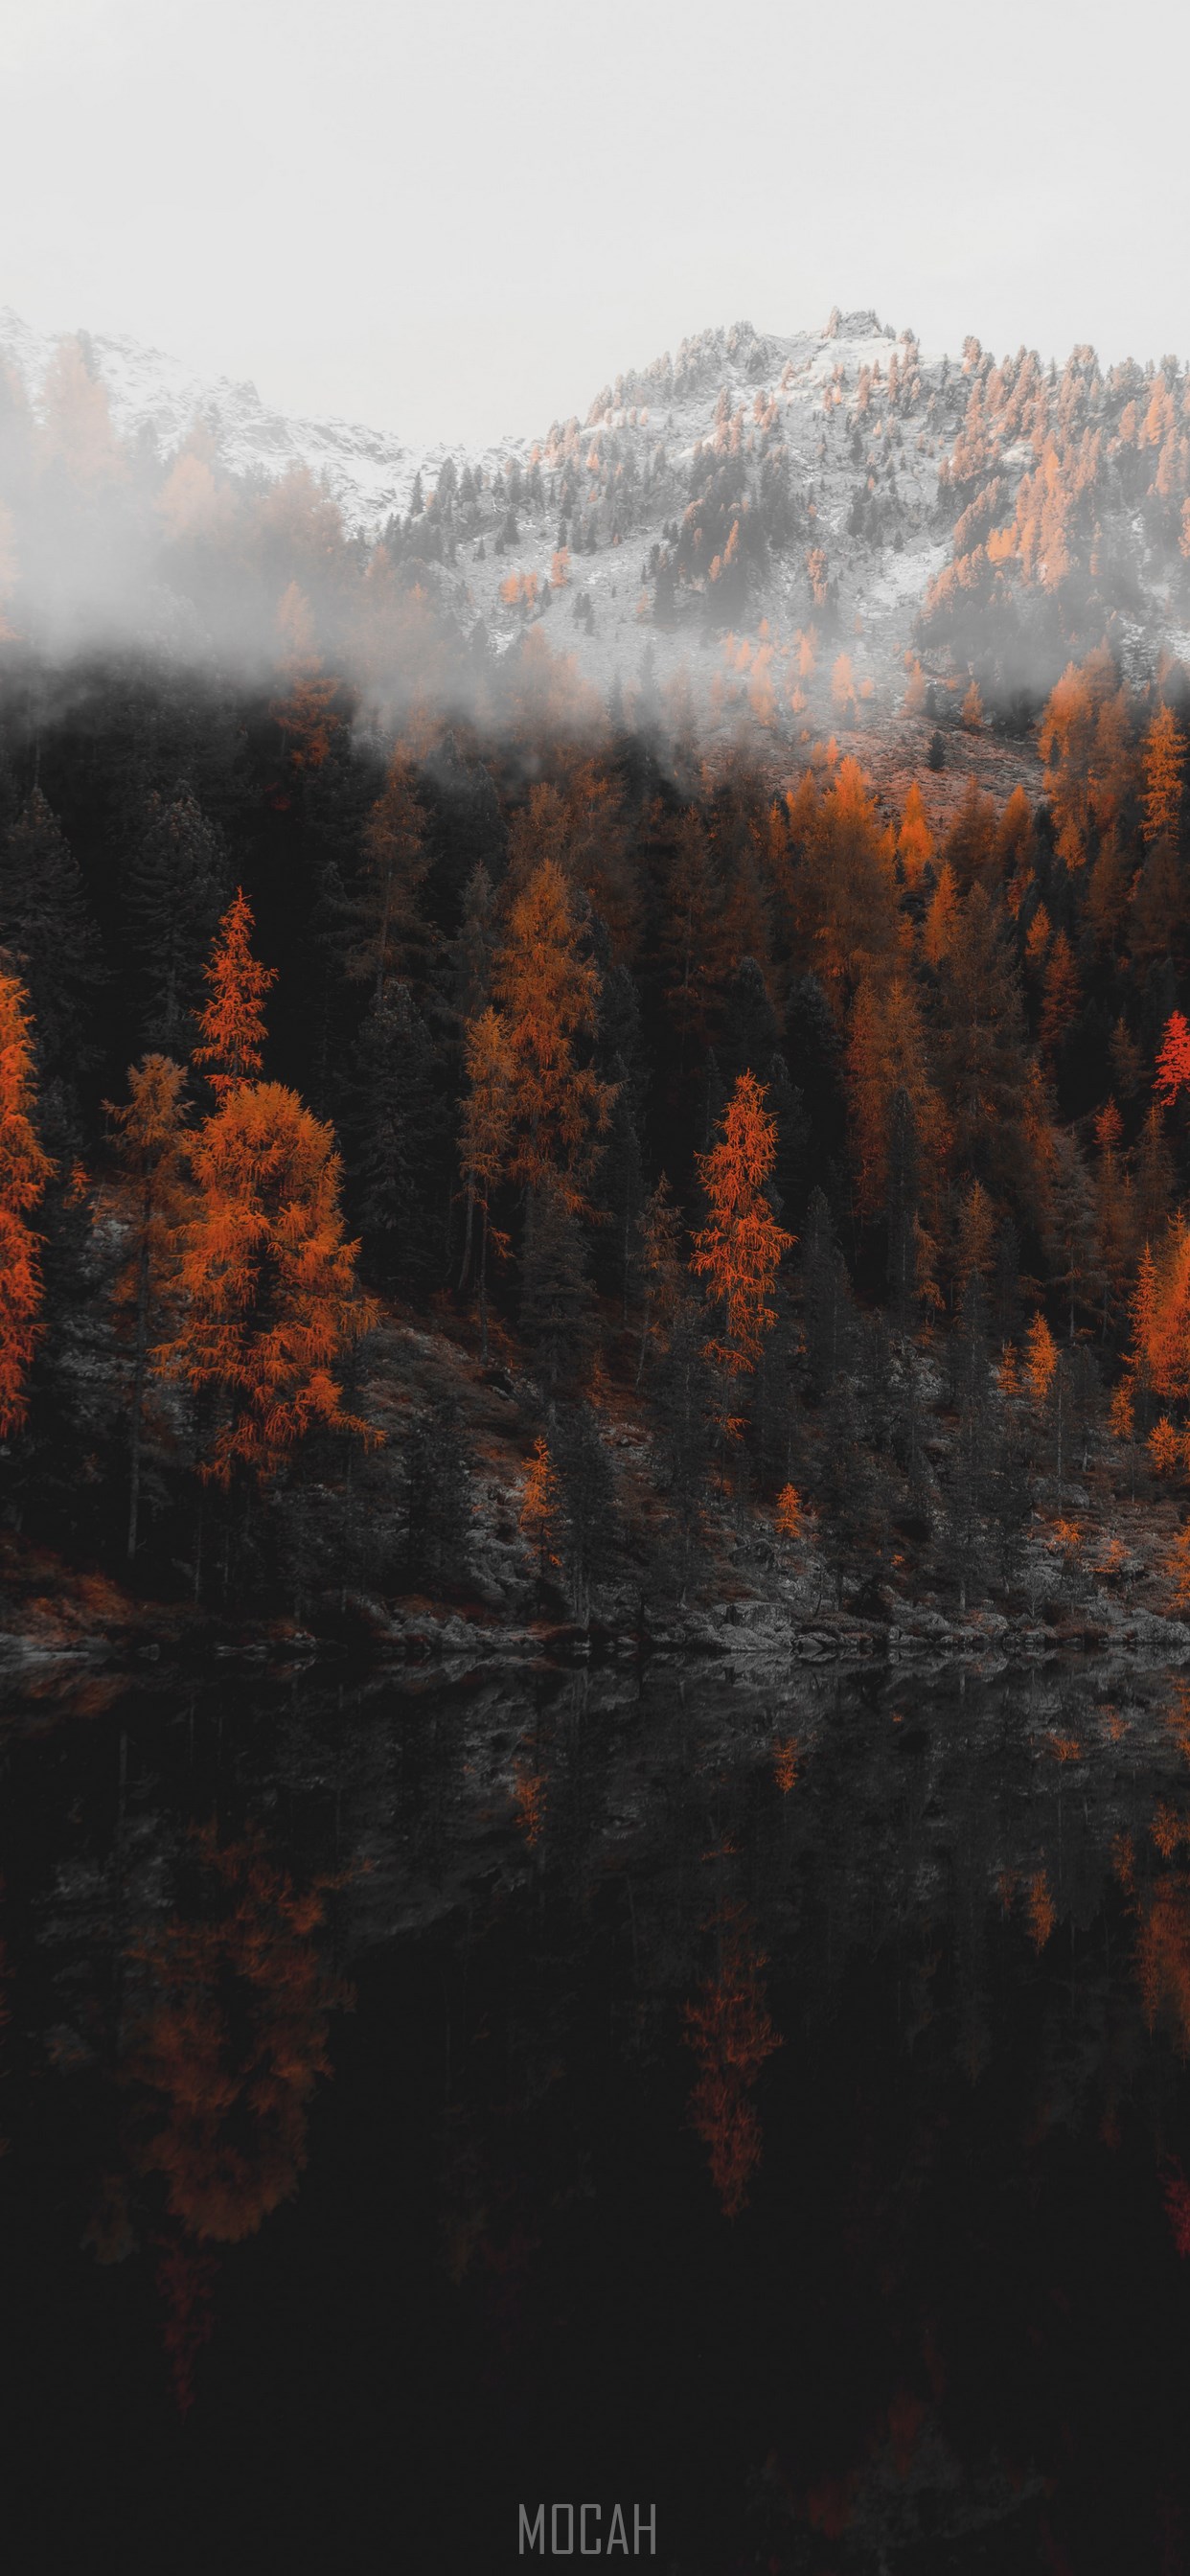 Reflection, Nature, Tree, Wilderness, Leaf, Apple iPhone 11 Pro Max screensaver hd, 1242x2688. Mocah HD Wallpaper